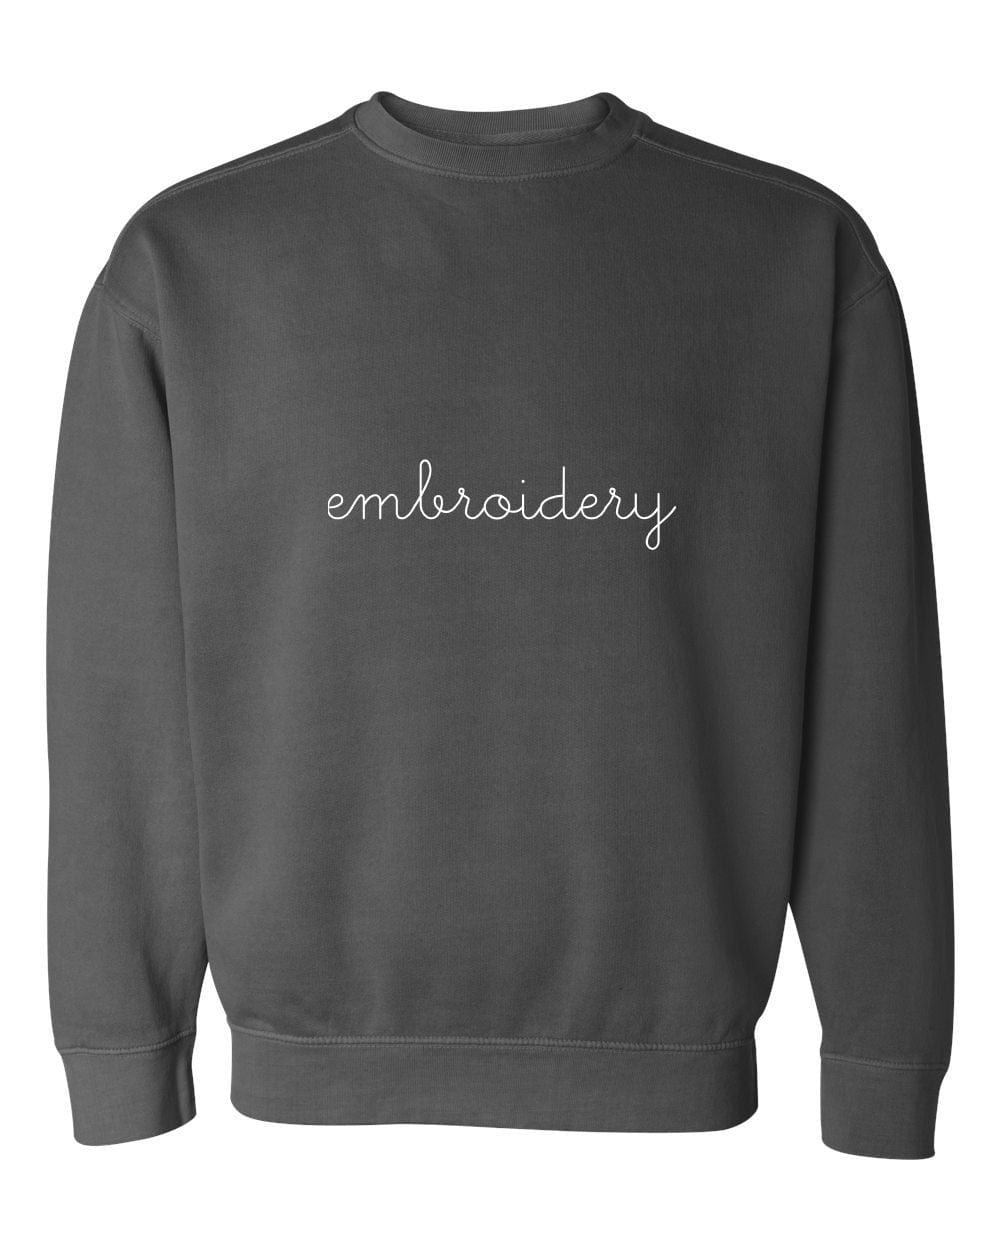 Monogrammed Crewneck Sweatshirt  Monogrammed crewneck sweatshirt